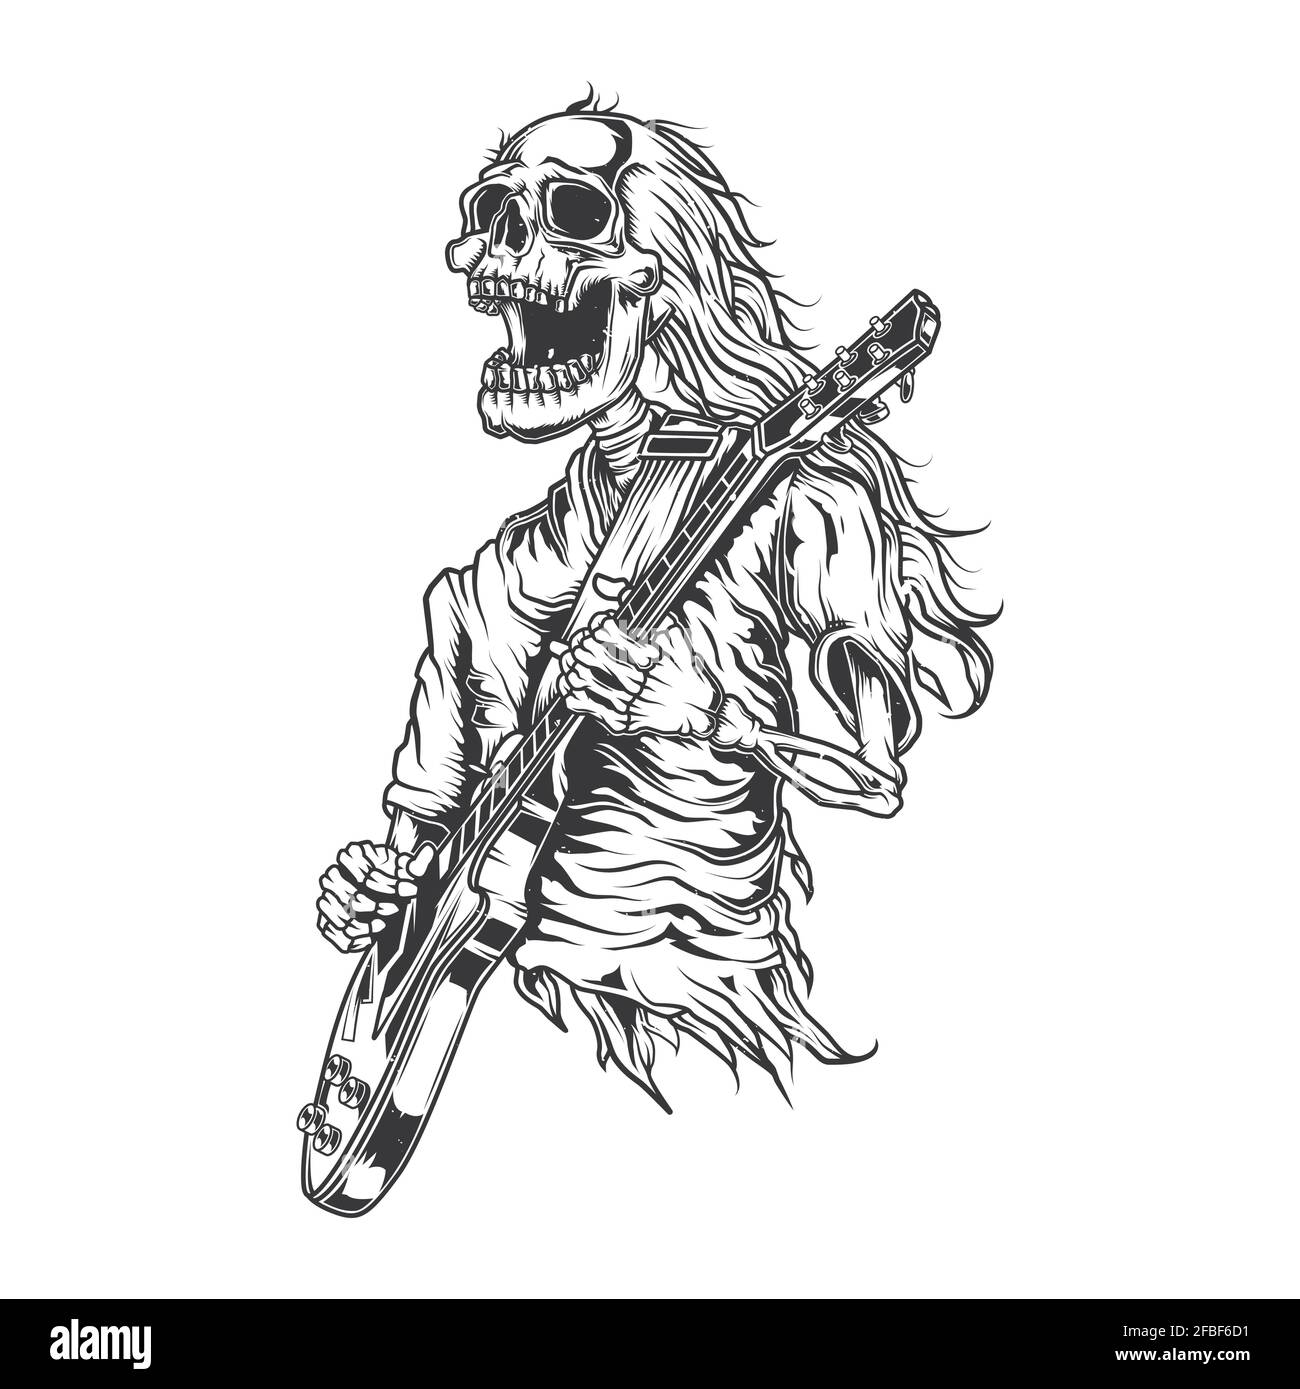 Emblem design with illustration of skeleton playing guitar Stock Vector